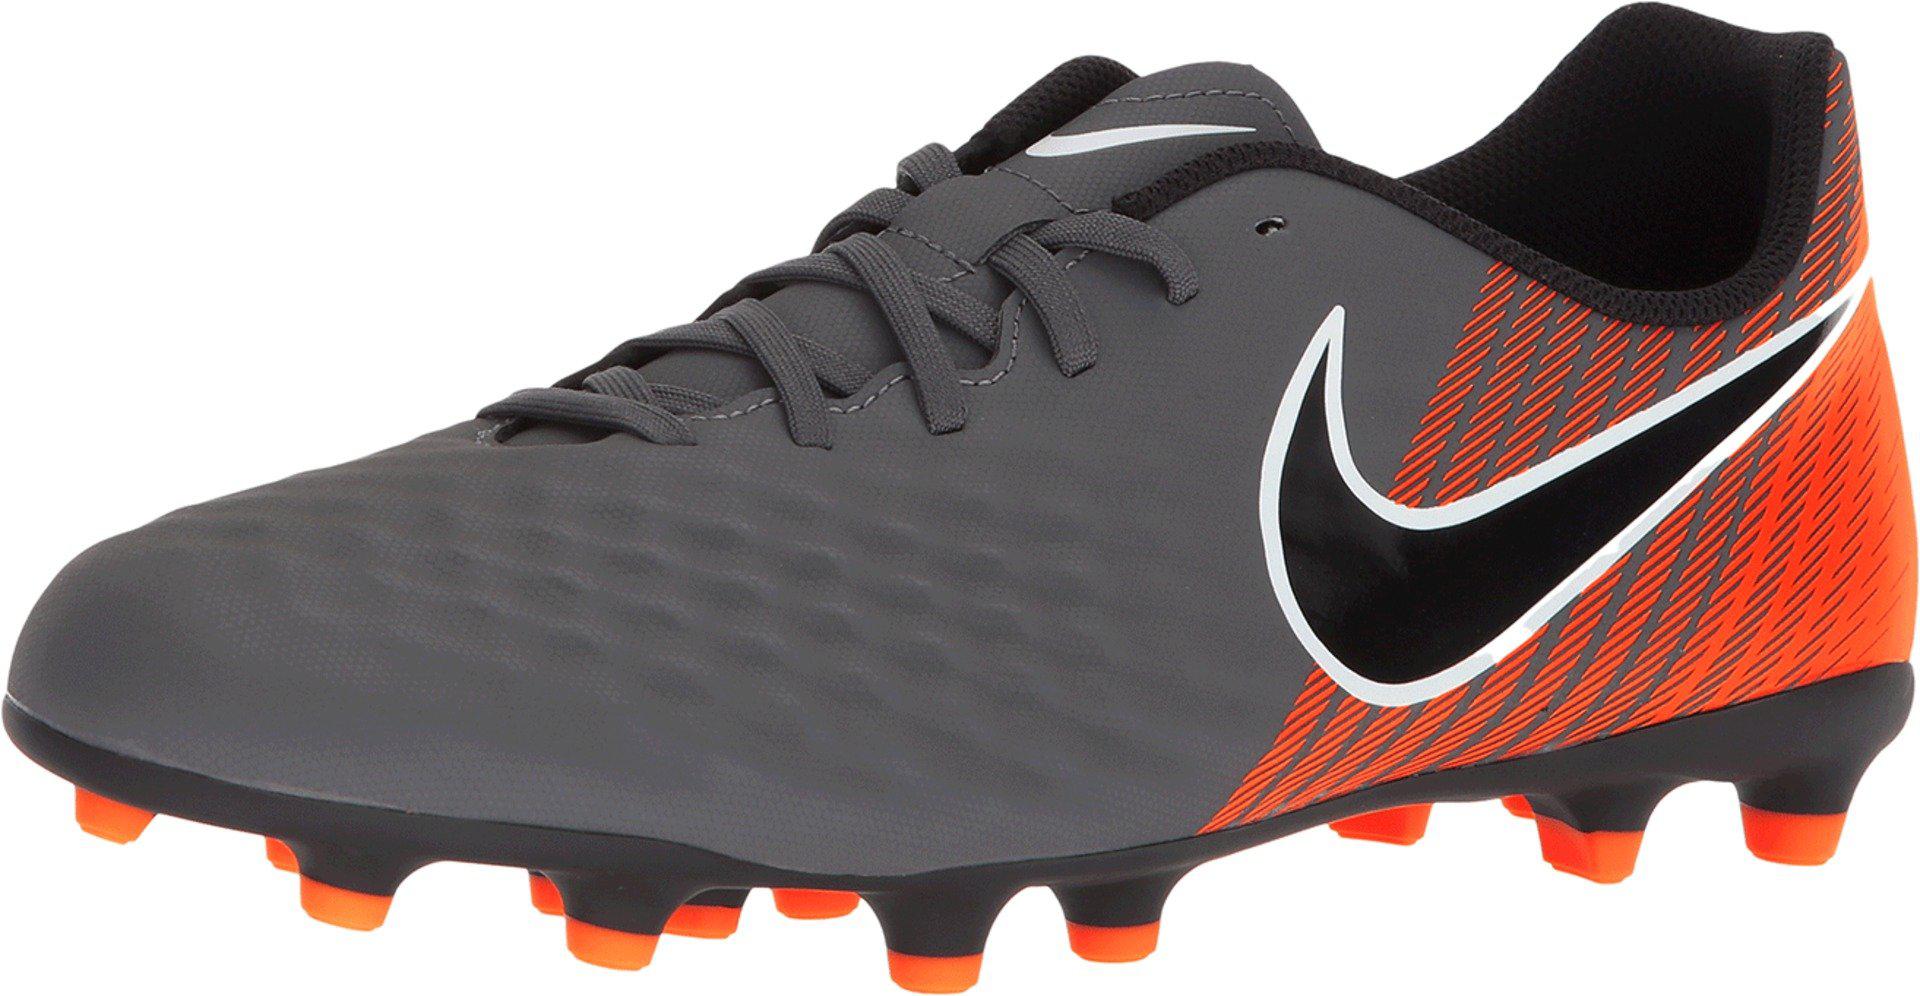 Nike Magista Obra II Artificial Grass Pro Football Boots Volt